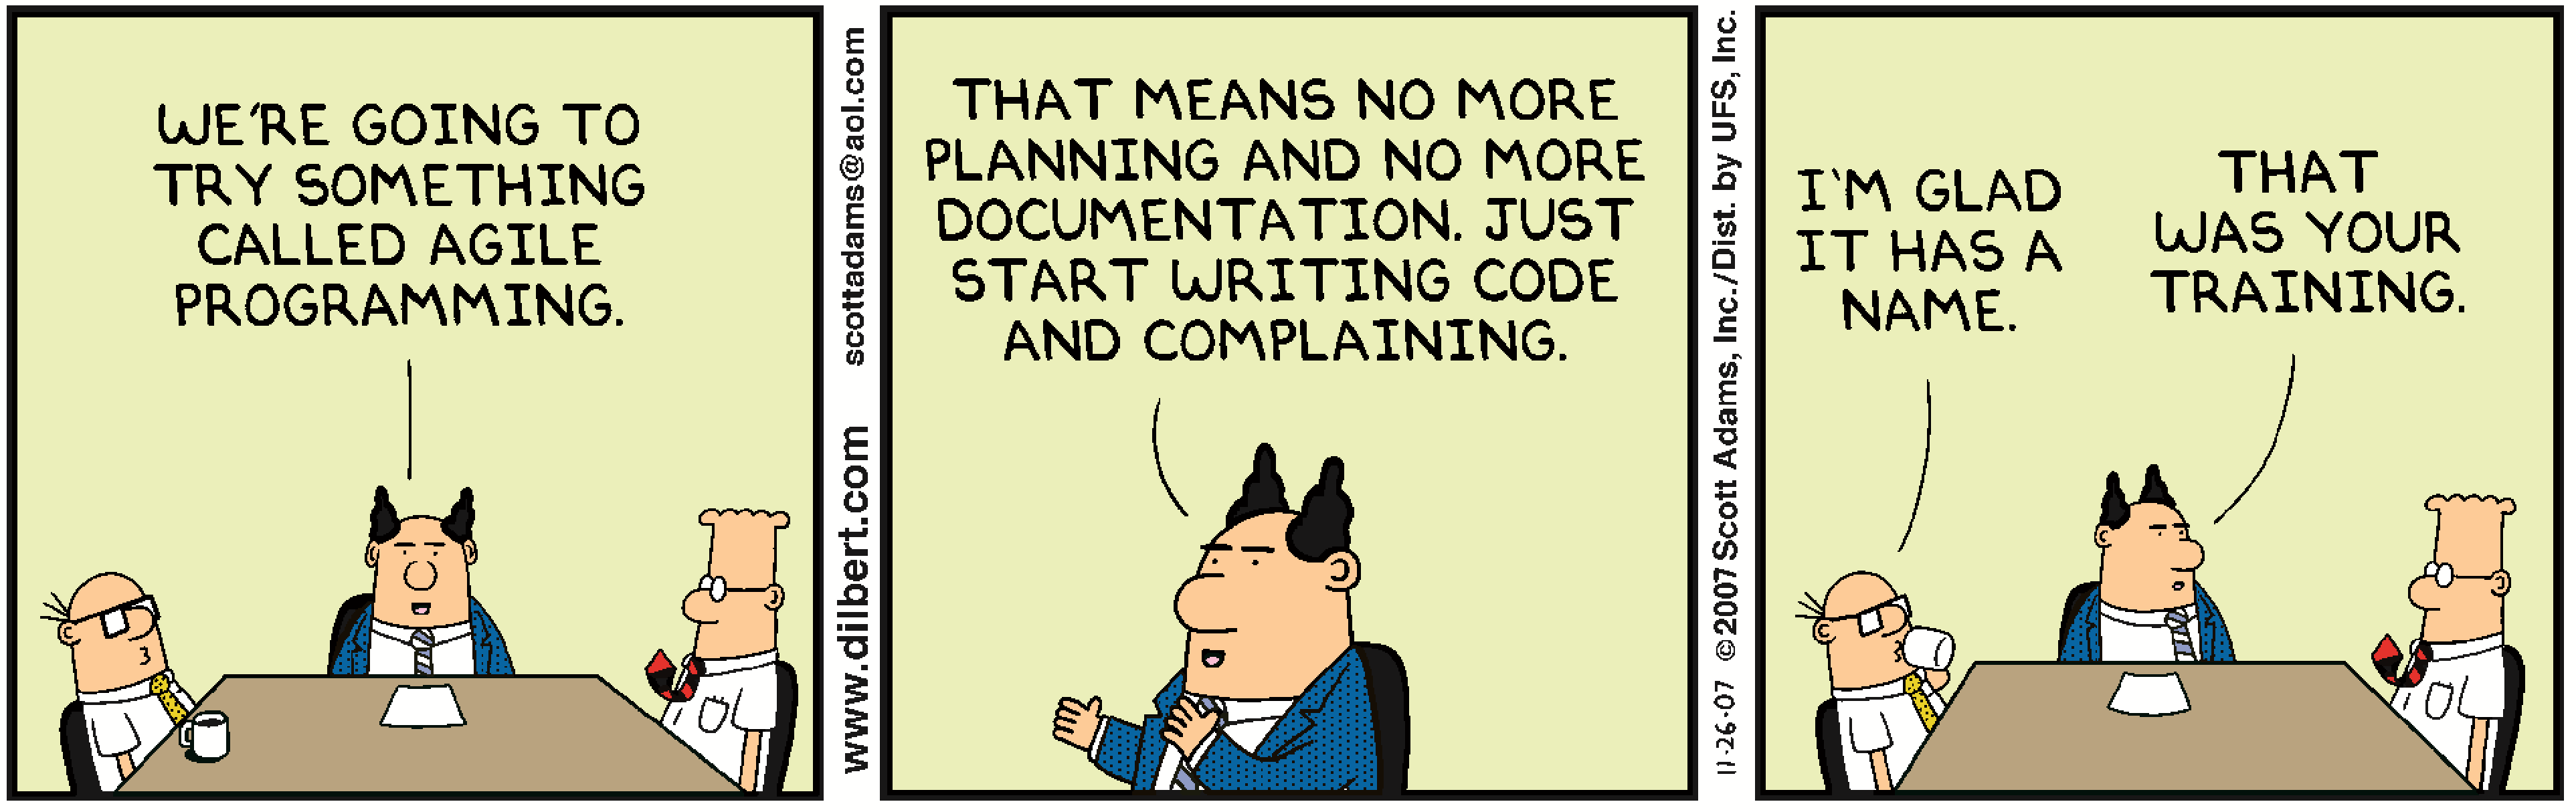 Dilbert_Training_Agile_Programming.png